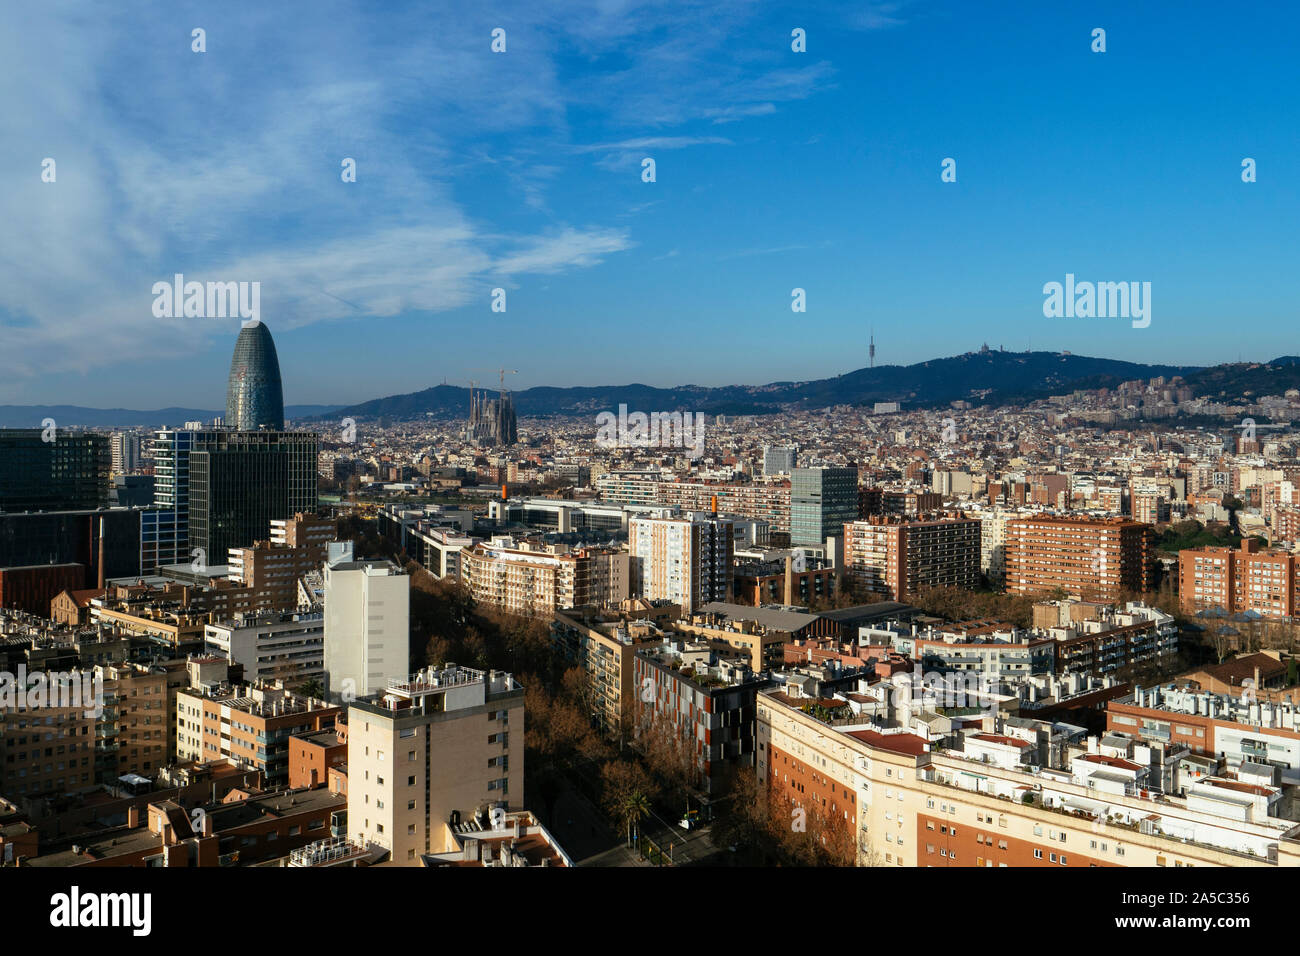 Barcelona city skyline featuring famous landmarks Torre Glories, La Sagrada Familia and the hillside of Tibidabo in the distance - Barcelona, Cataloni Stock Photo